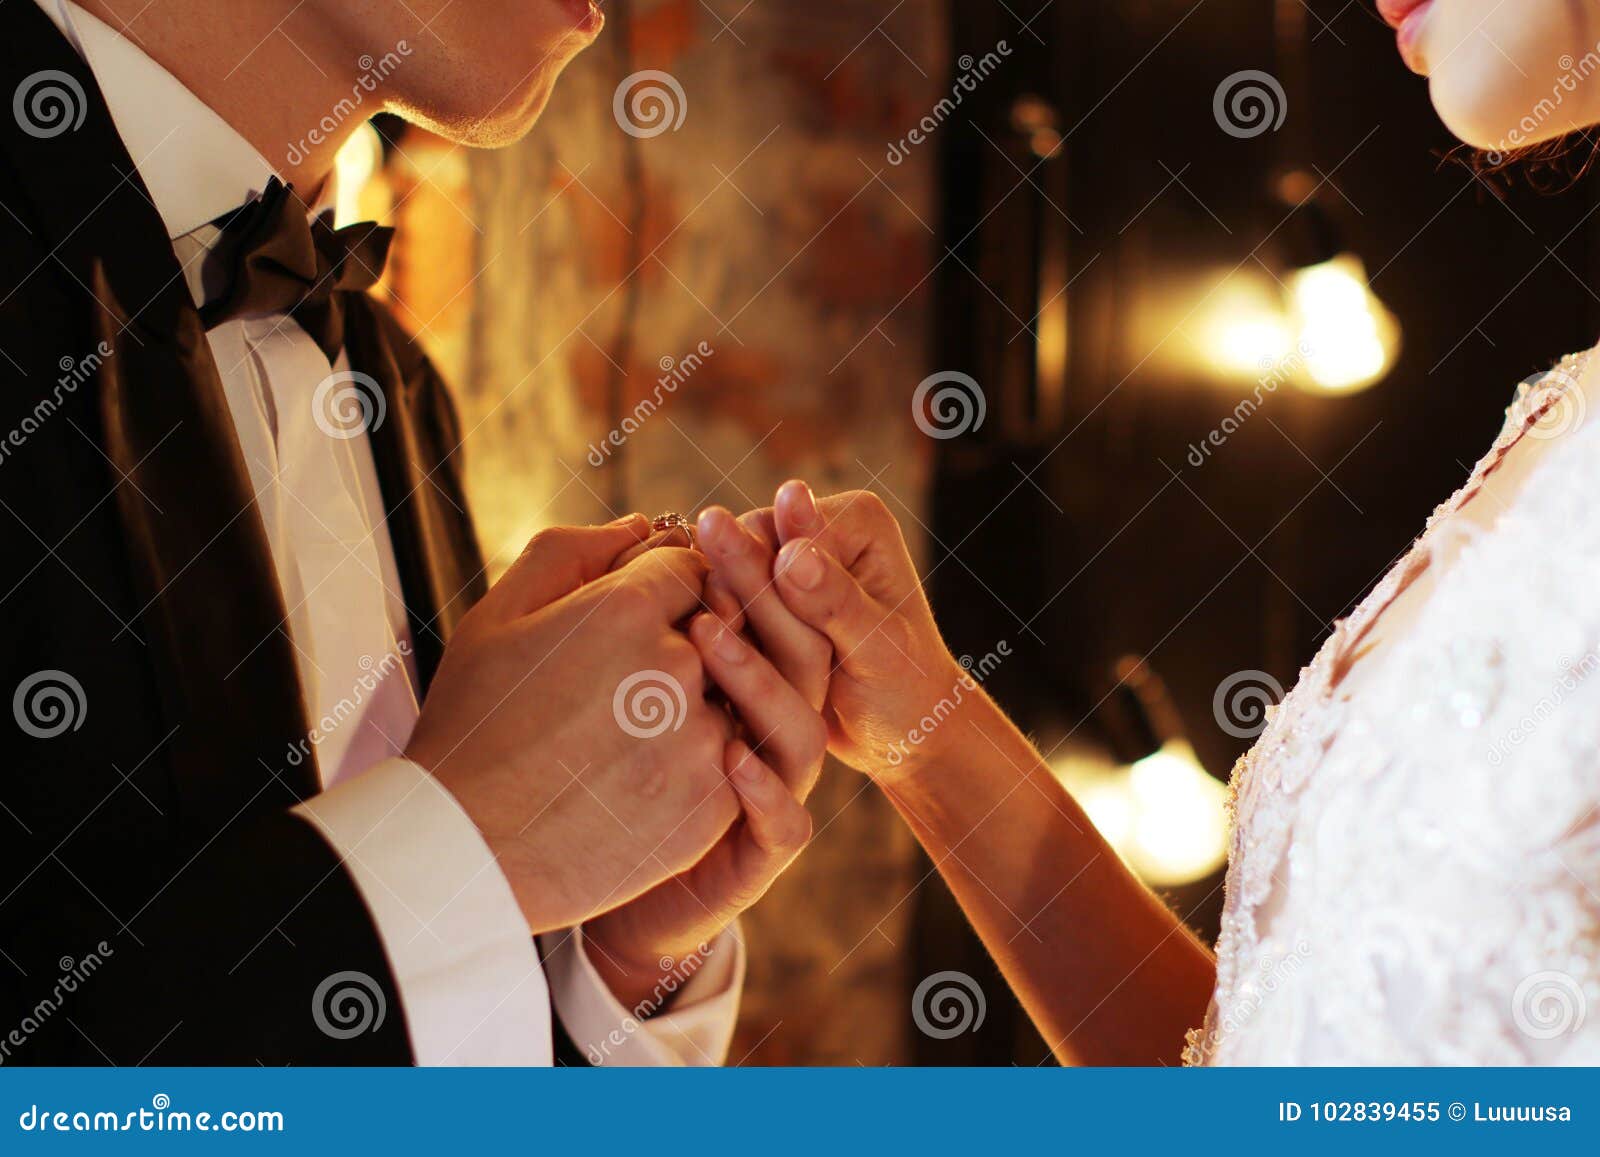 newlyweds exchange rings, groom puts the ring on the bride`s hand in marriage registry office. dark brown background